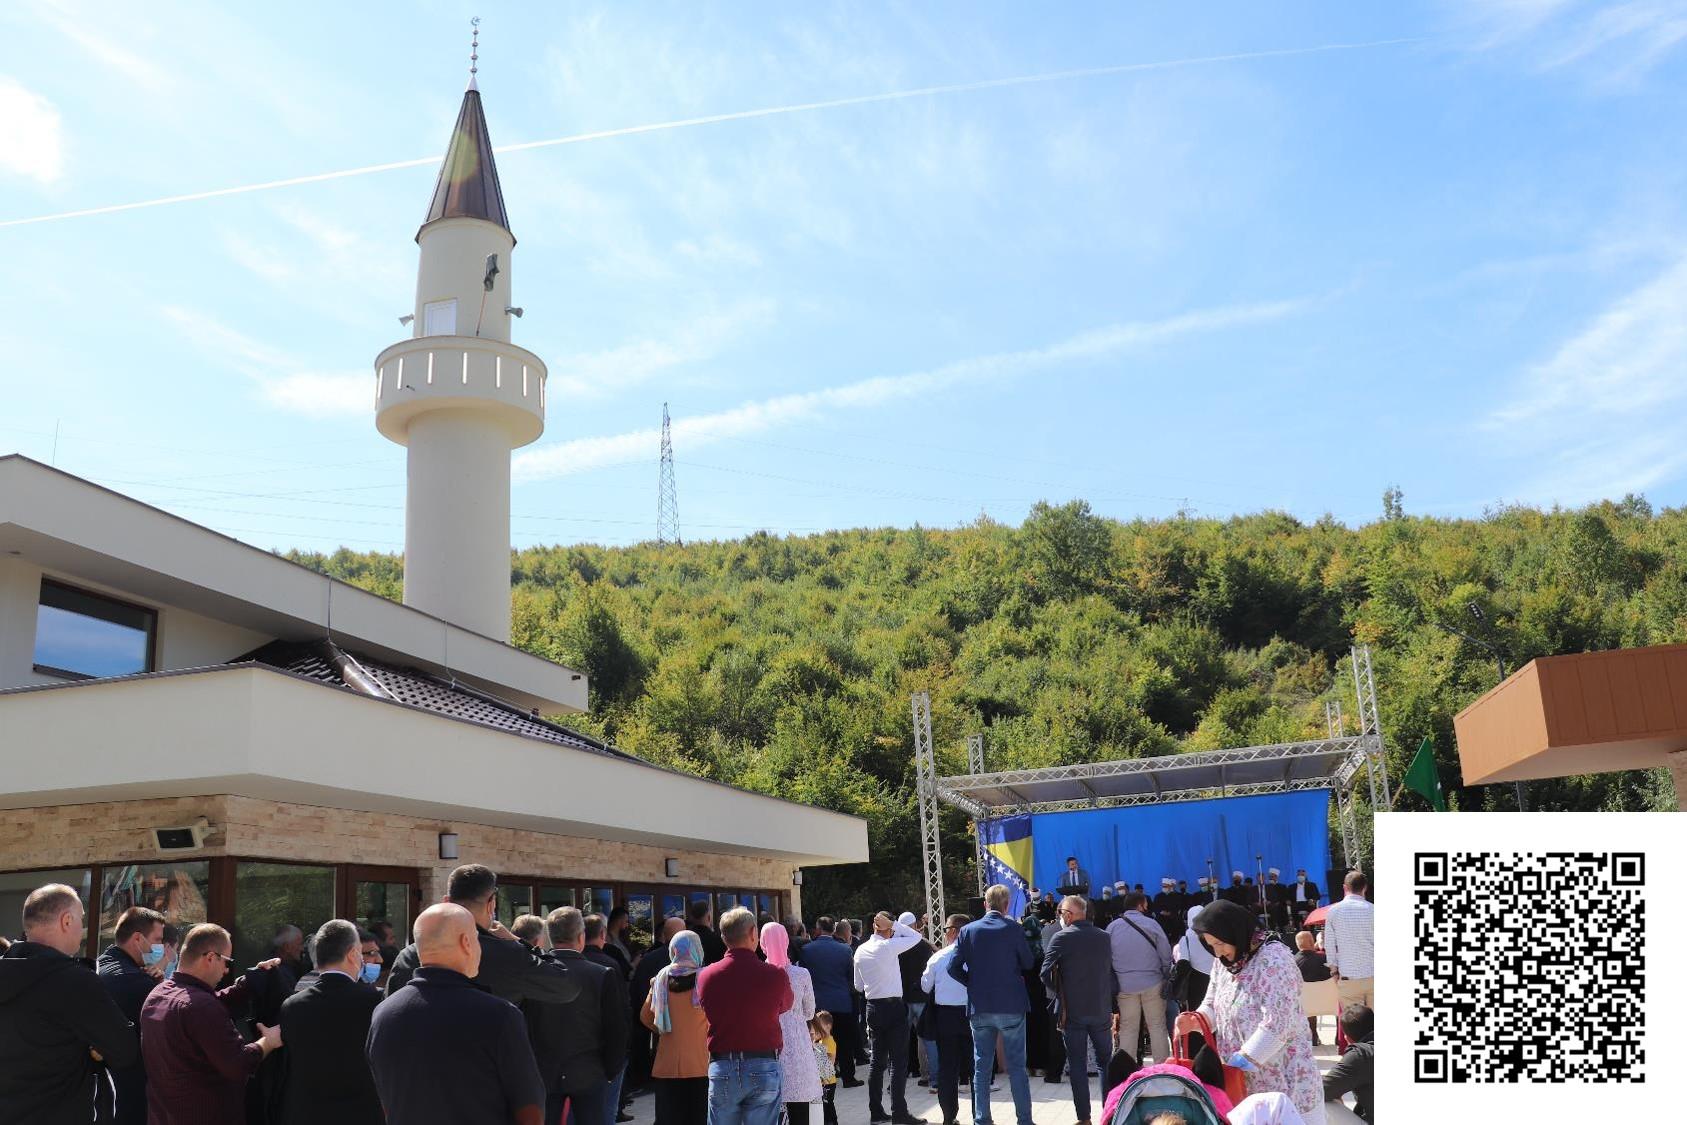 Svečano otvorenje džamije Mesudija u naselju Rječica upriličeno 24.septembra - Avaz